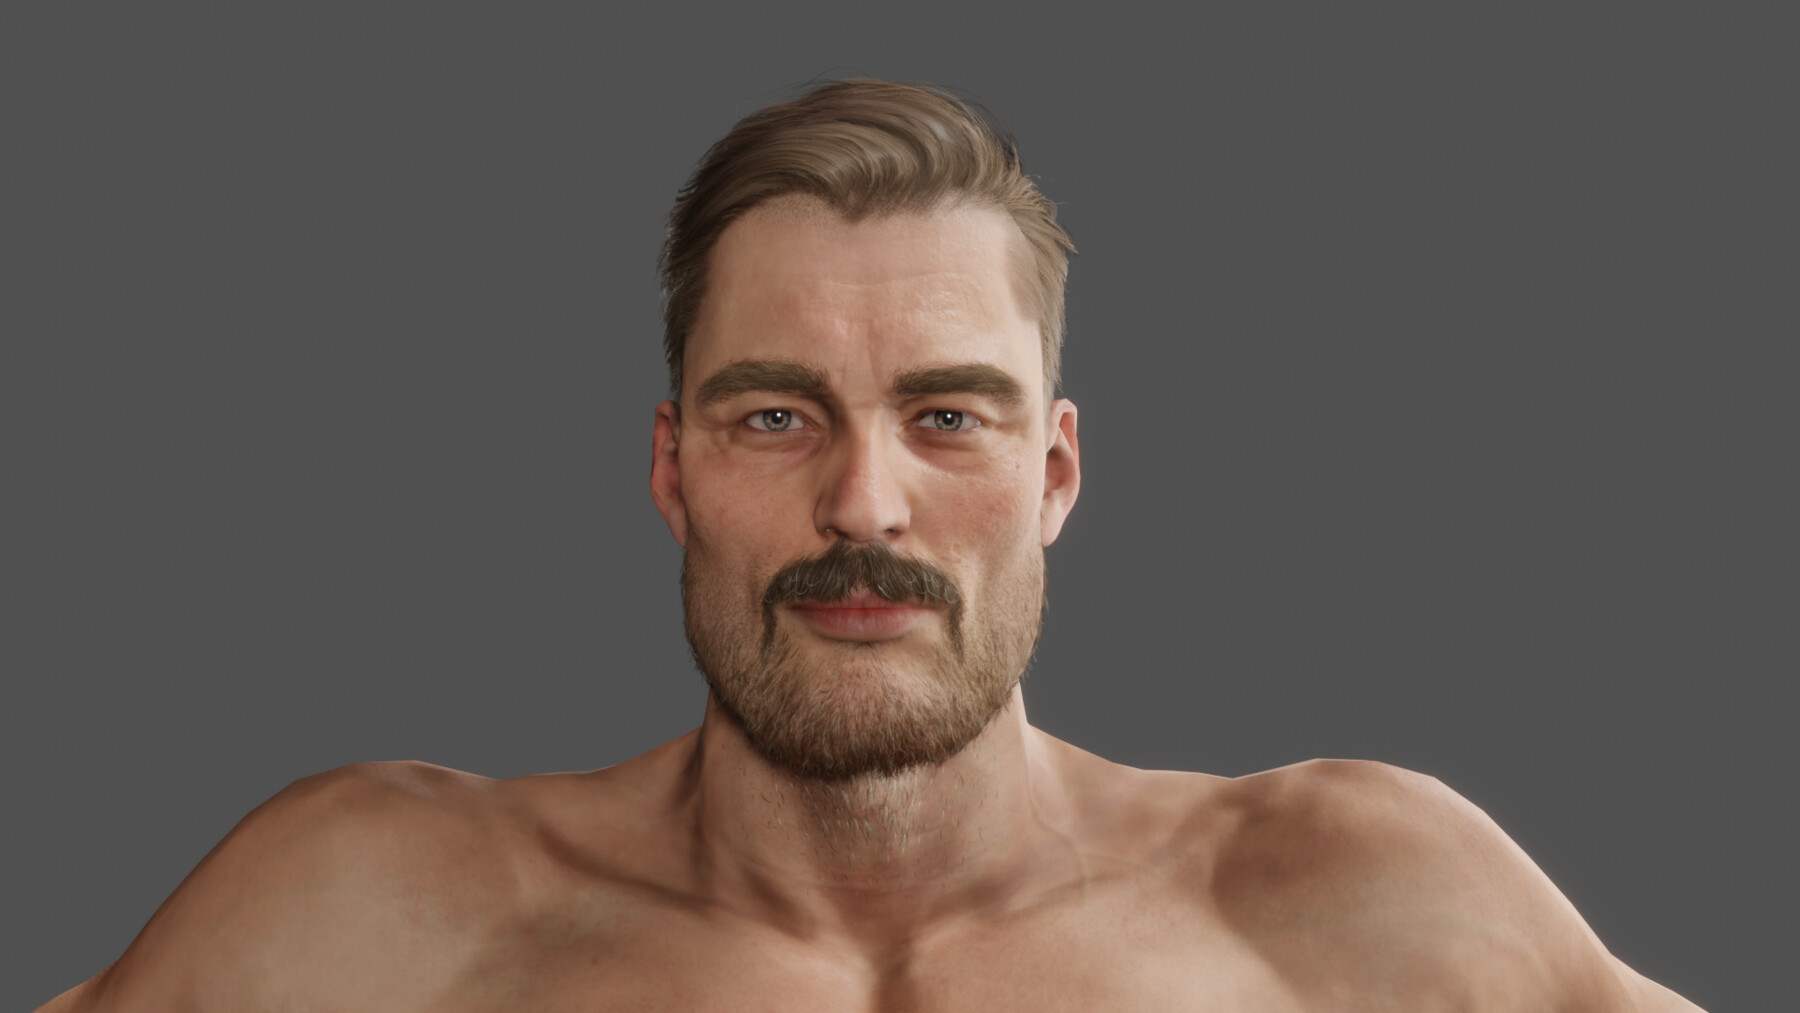 3D model Gym Bro - Giga Chad- Muscular man fitness crossfit VR